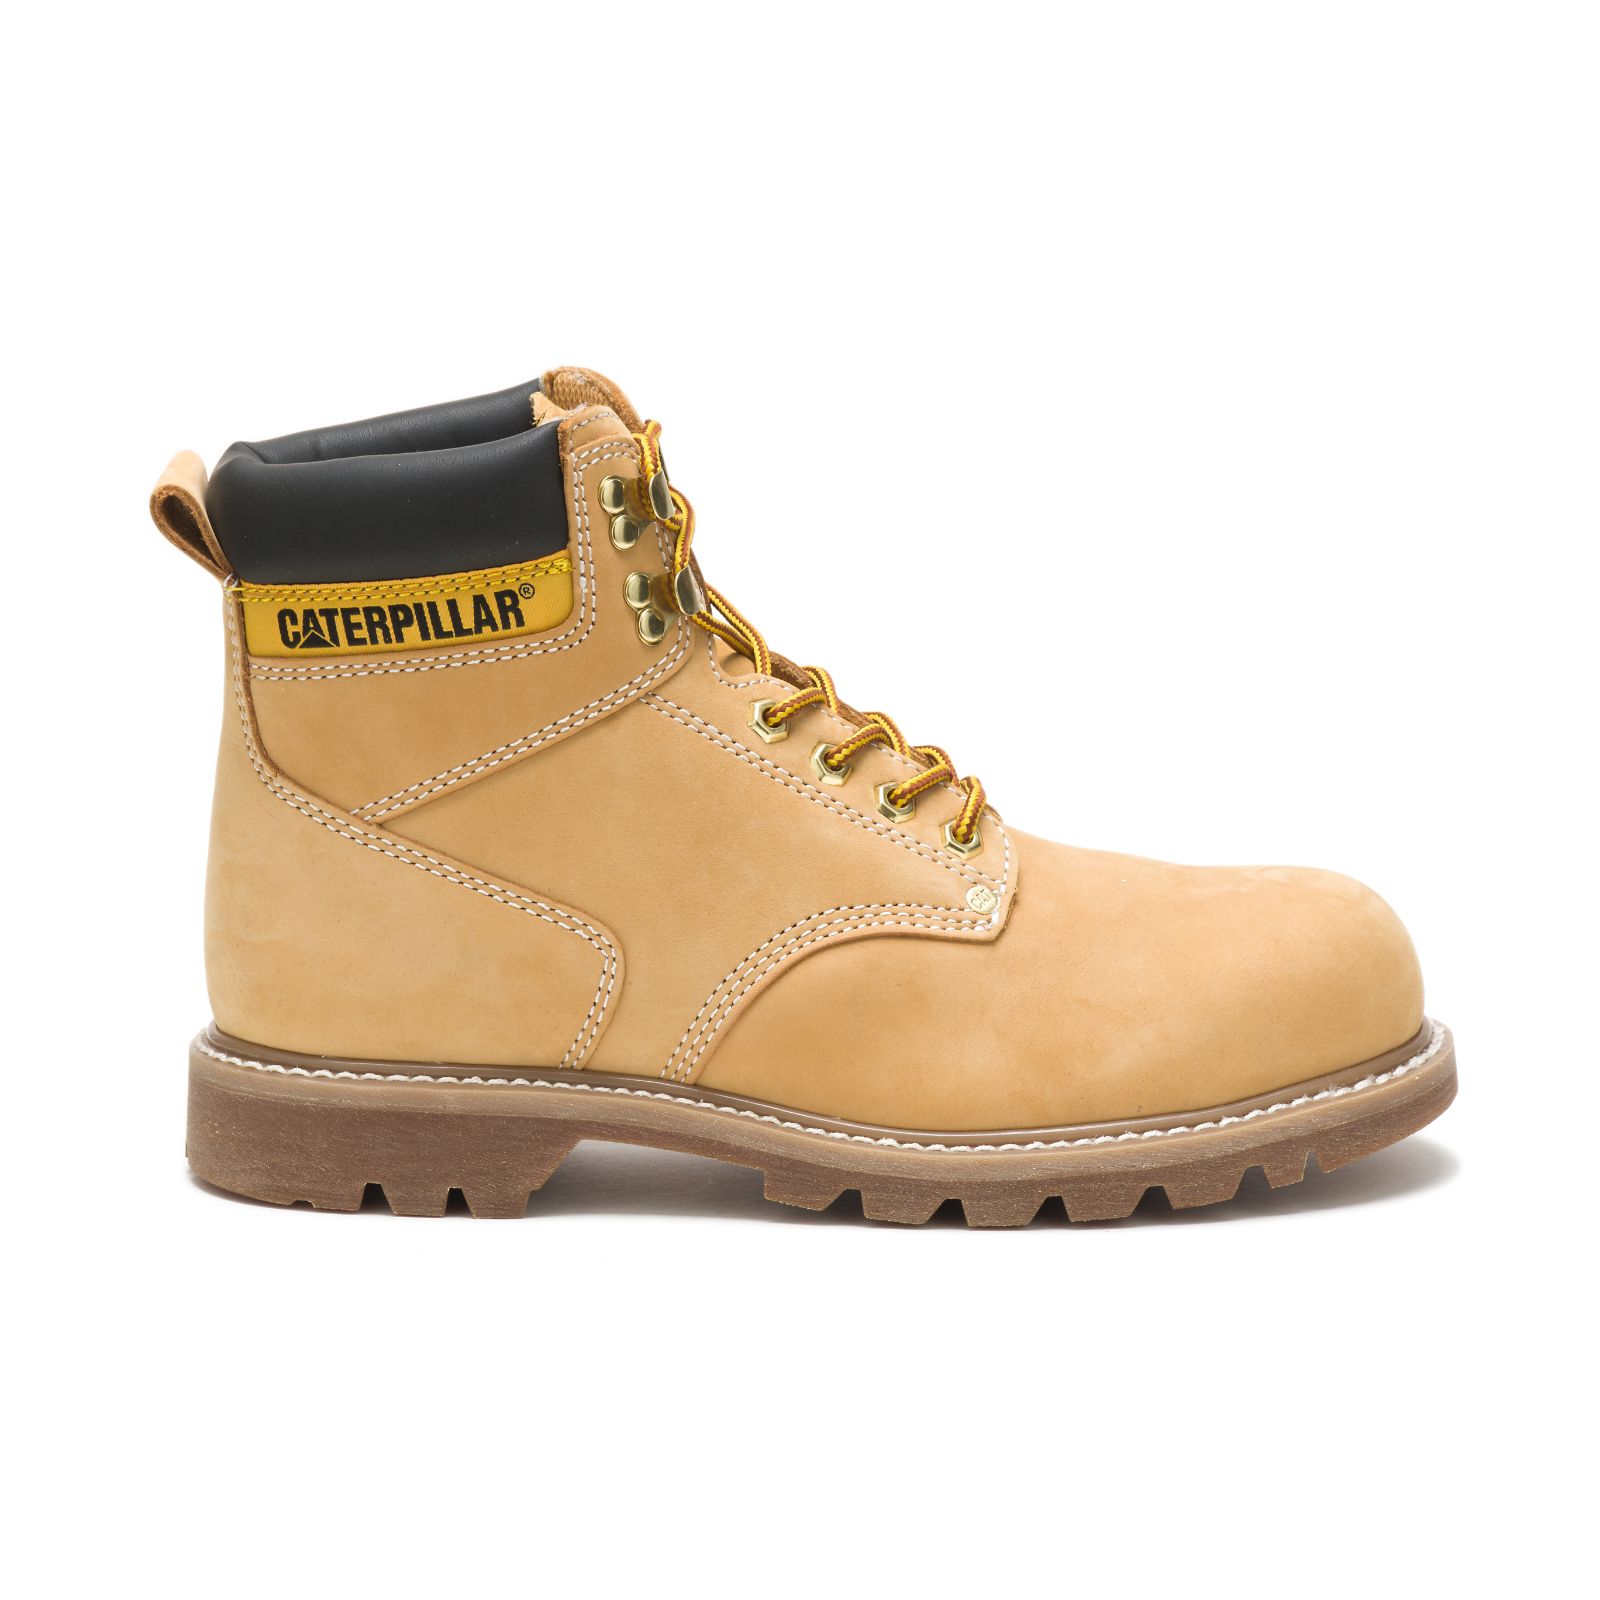 Caterpillar Boots Sale - Caterpillar Second Shift Steel Toe Mens Work Boots Orange (512048-HRA)